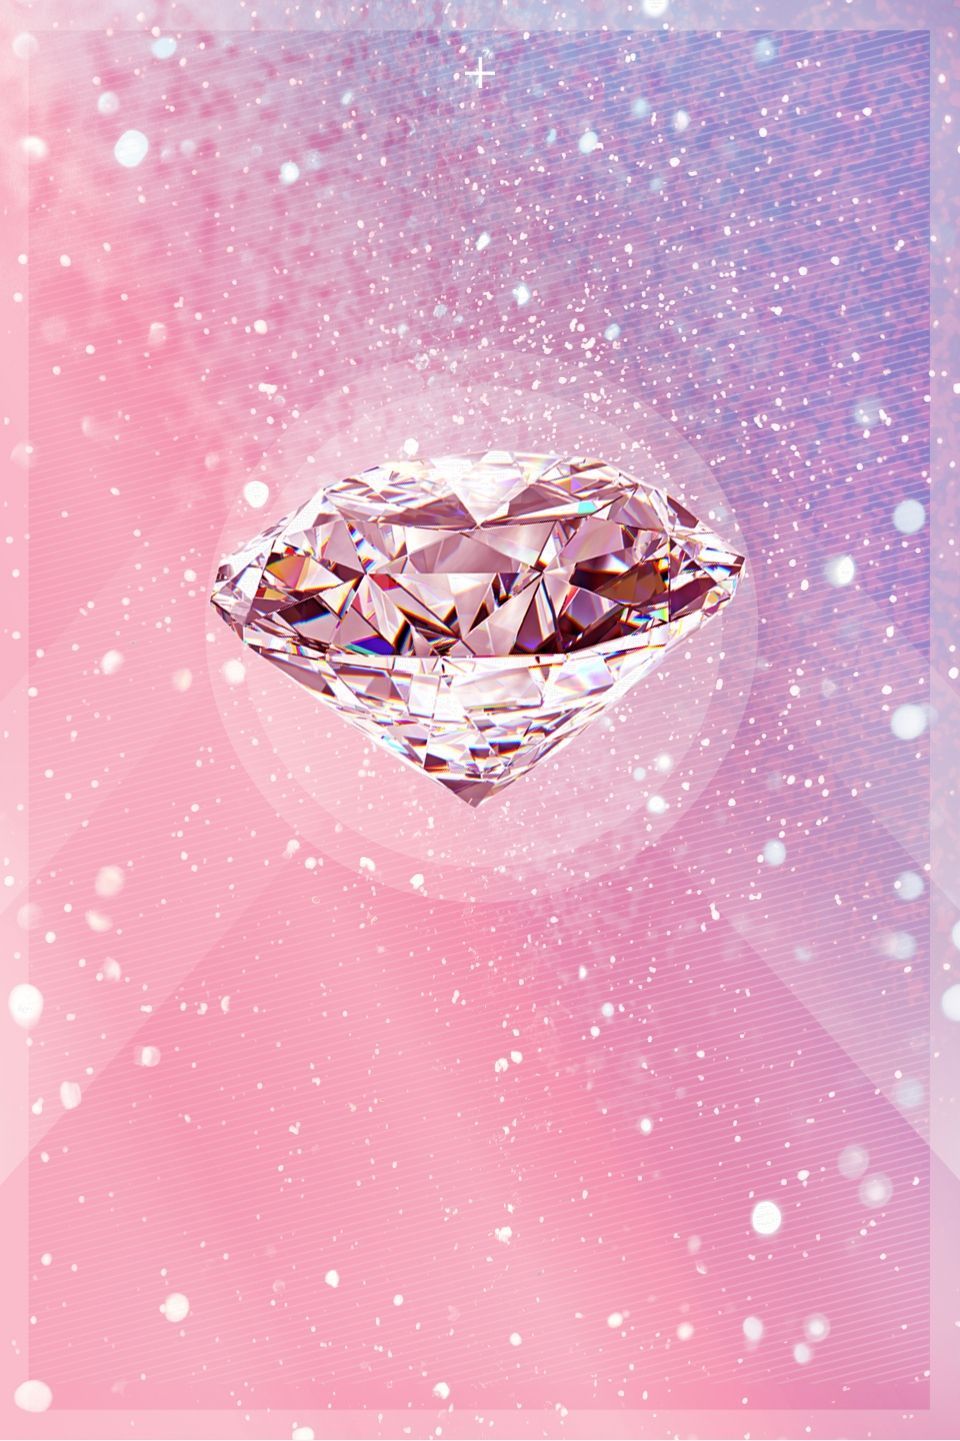 A diamond on a pink background - Diamond